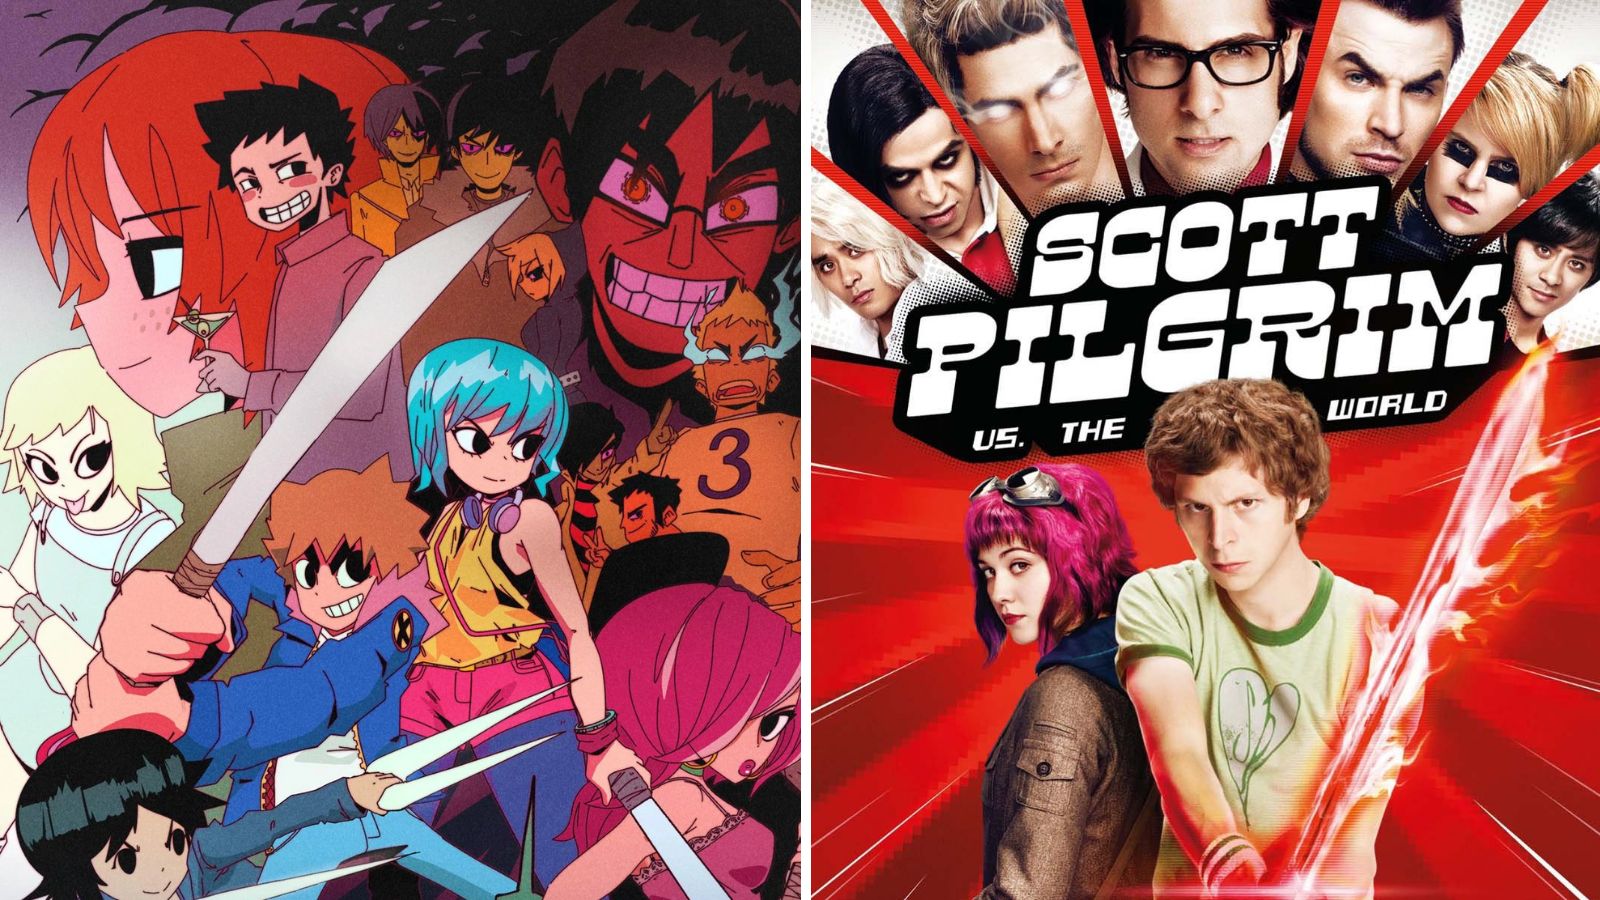 Scott Pilgrim tendrá serie animada en Netflix, con el cast original